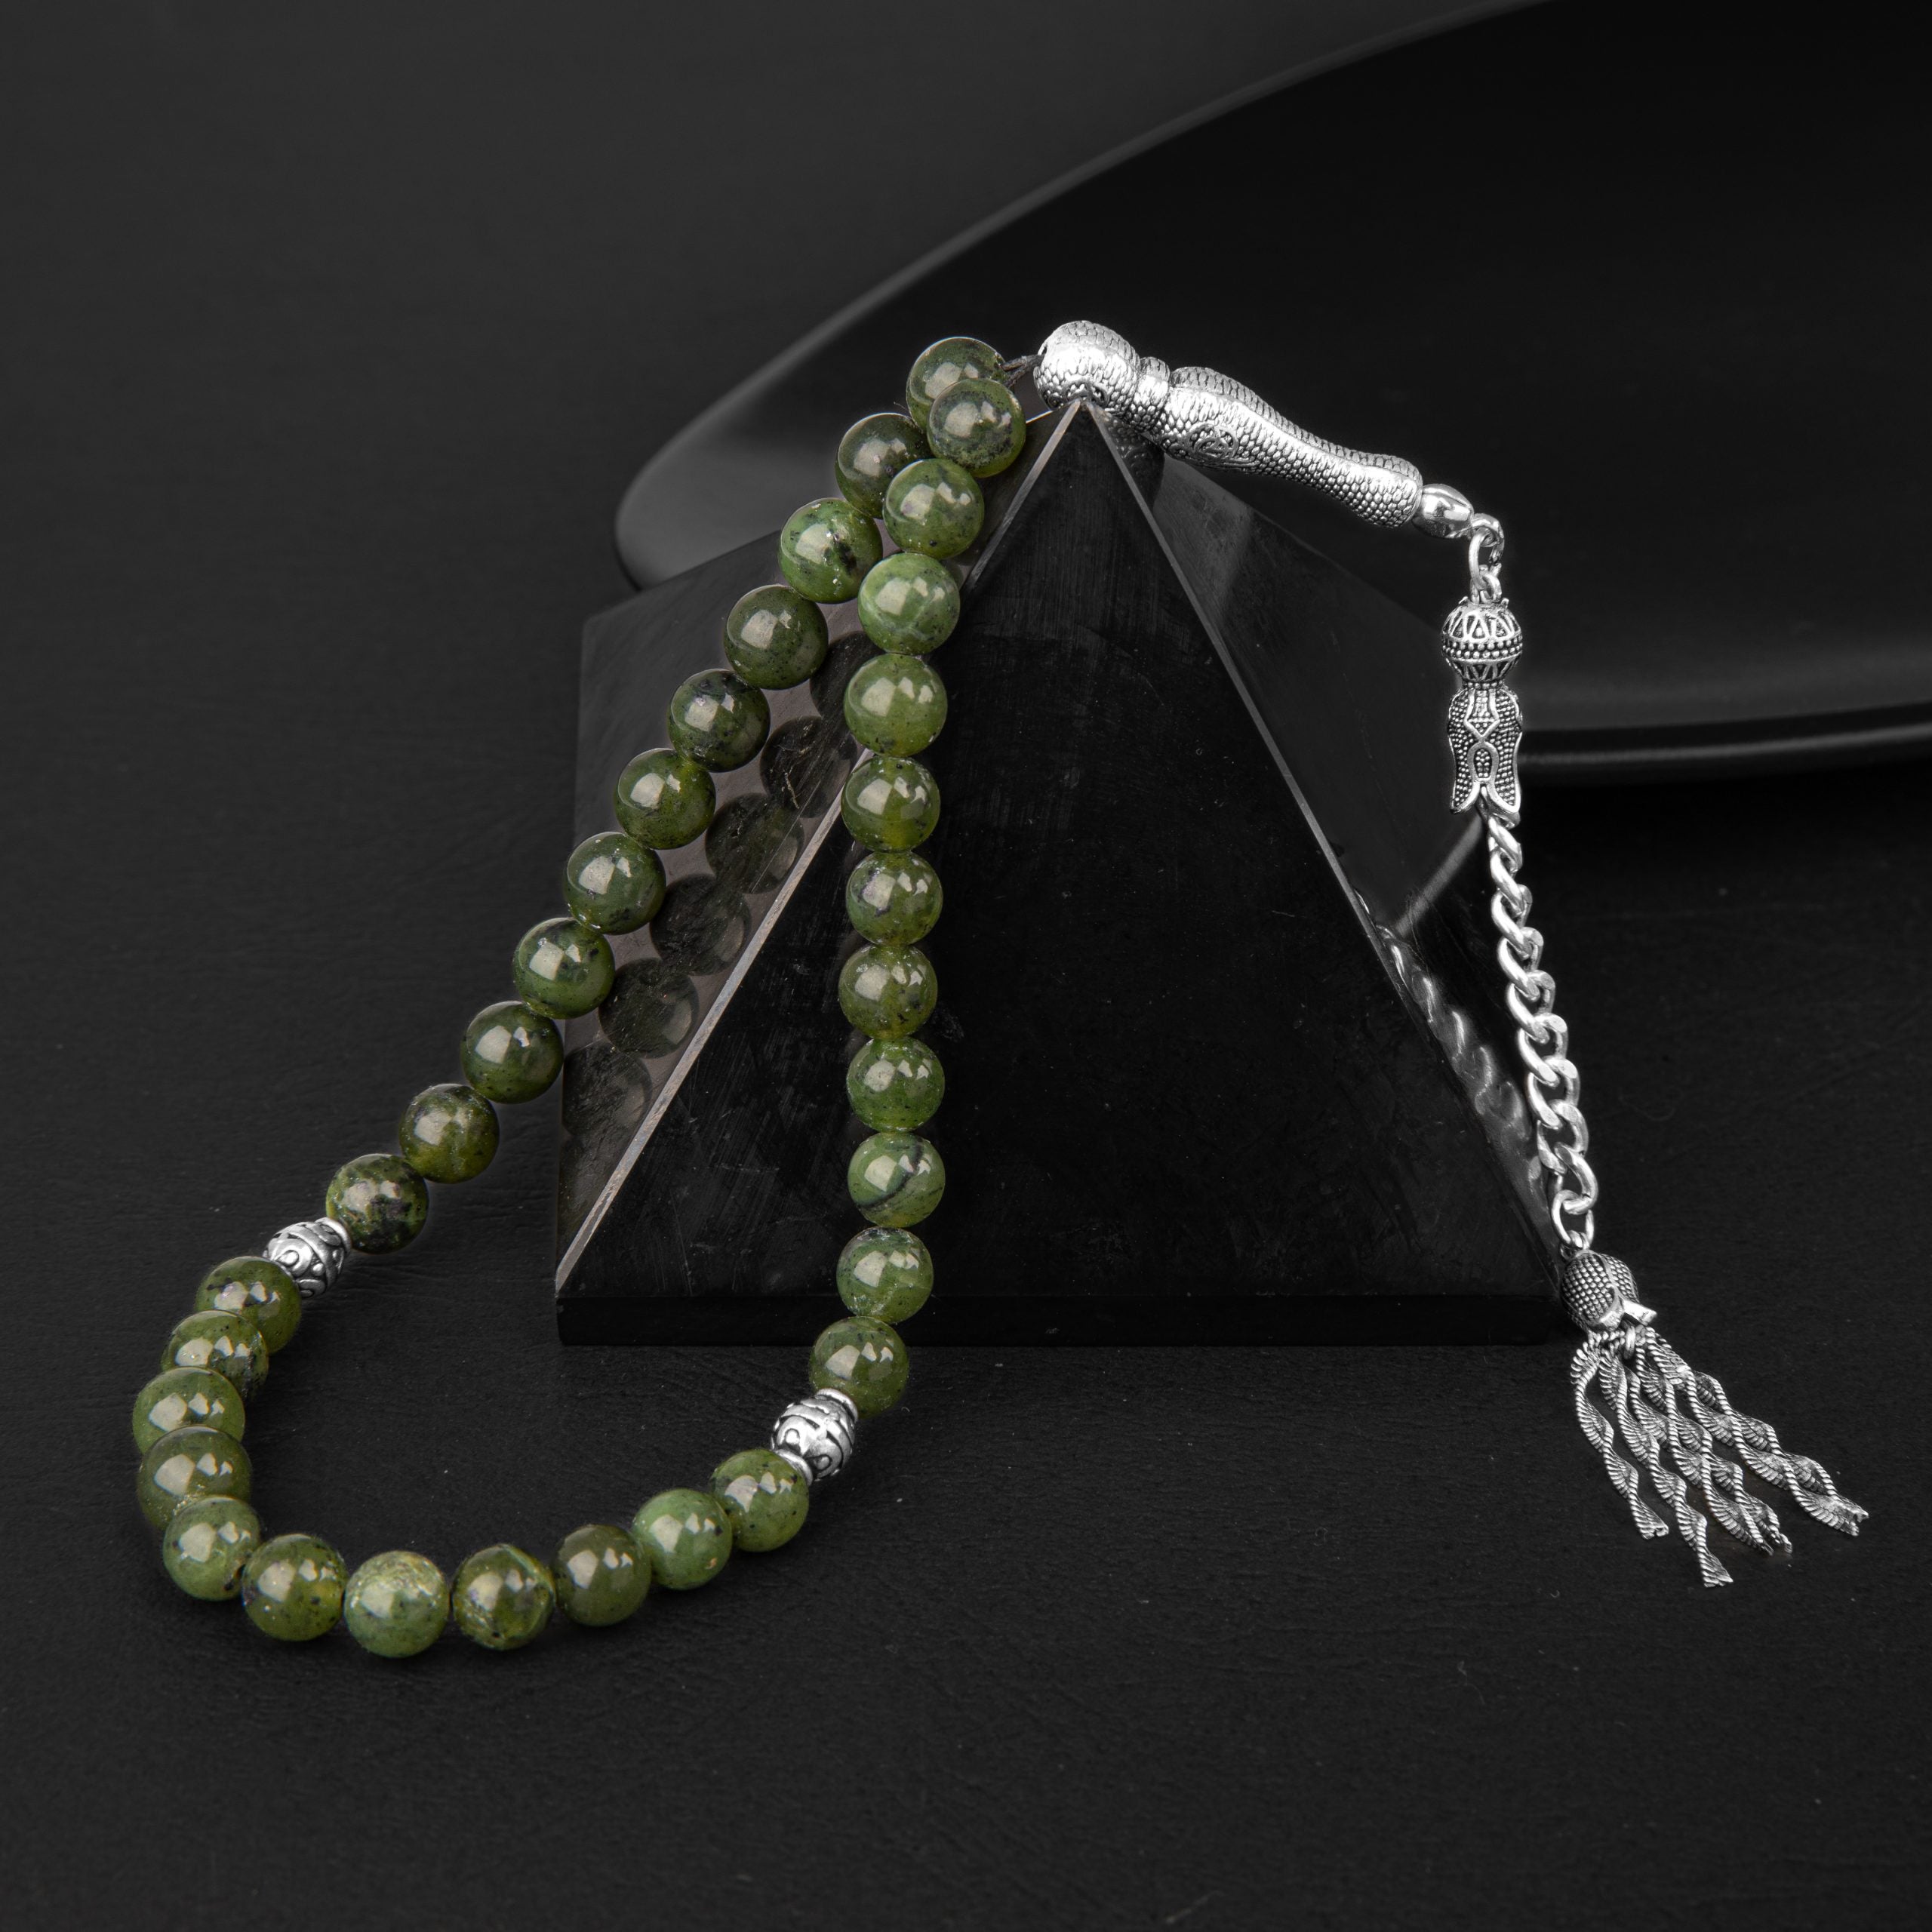 Jade Natural Stone Prayer Beads 33 pieces - 8mm